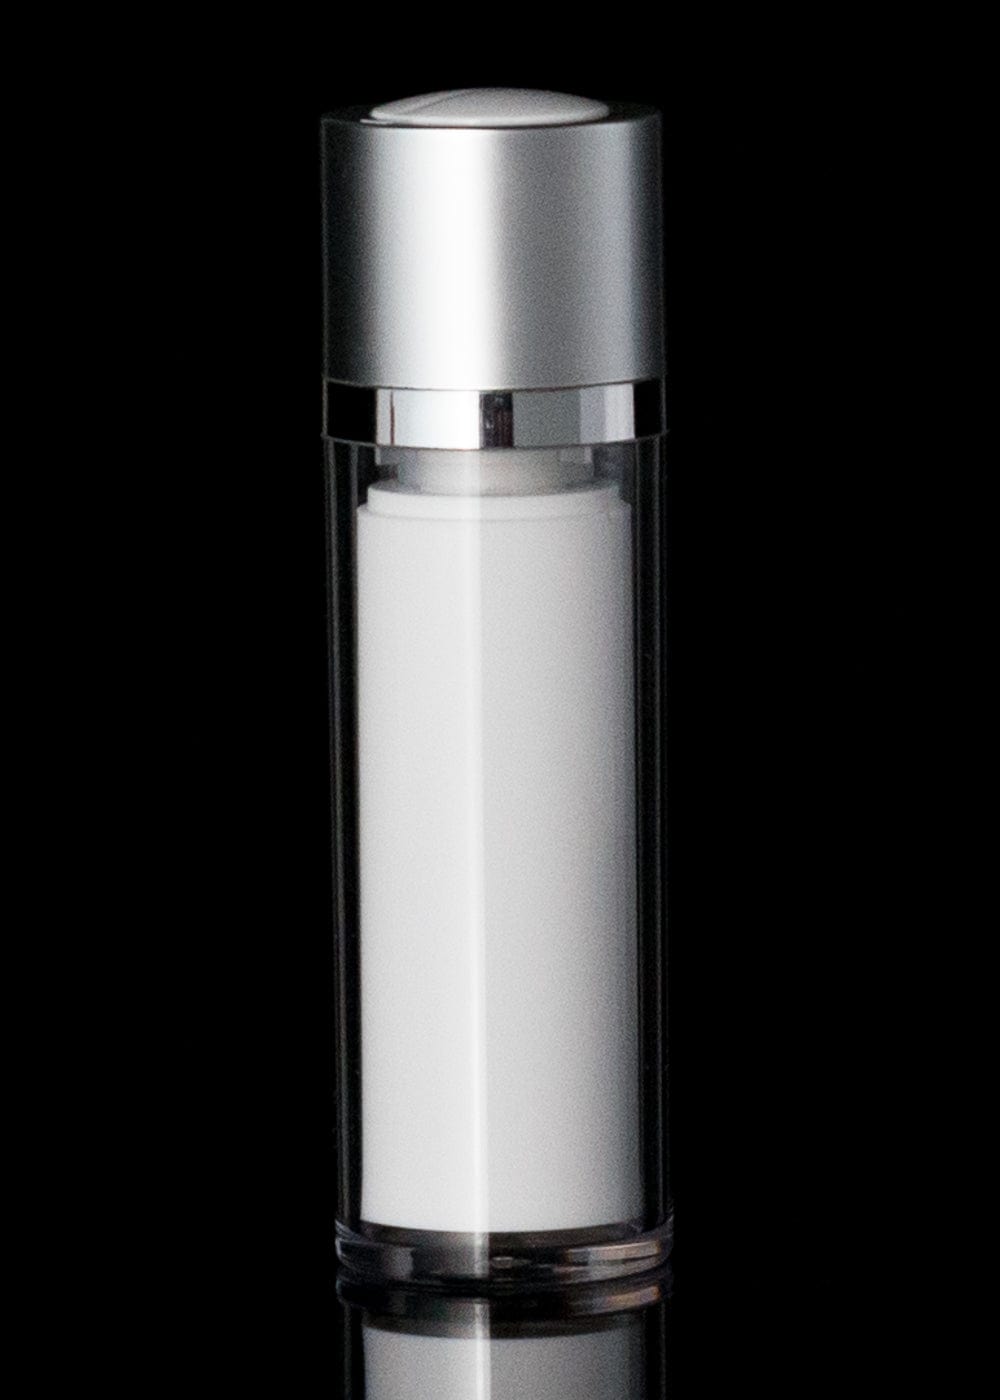 Helix Bottle Rocket - American Helix